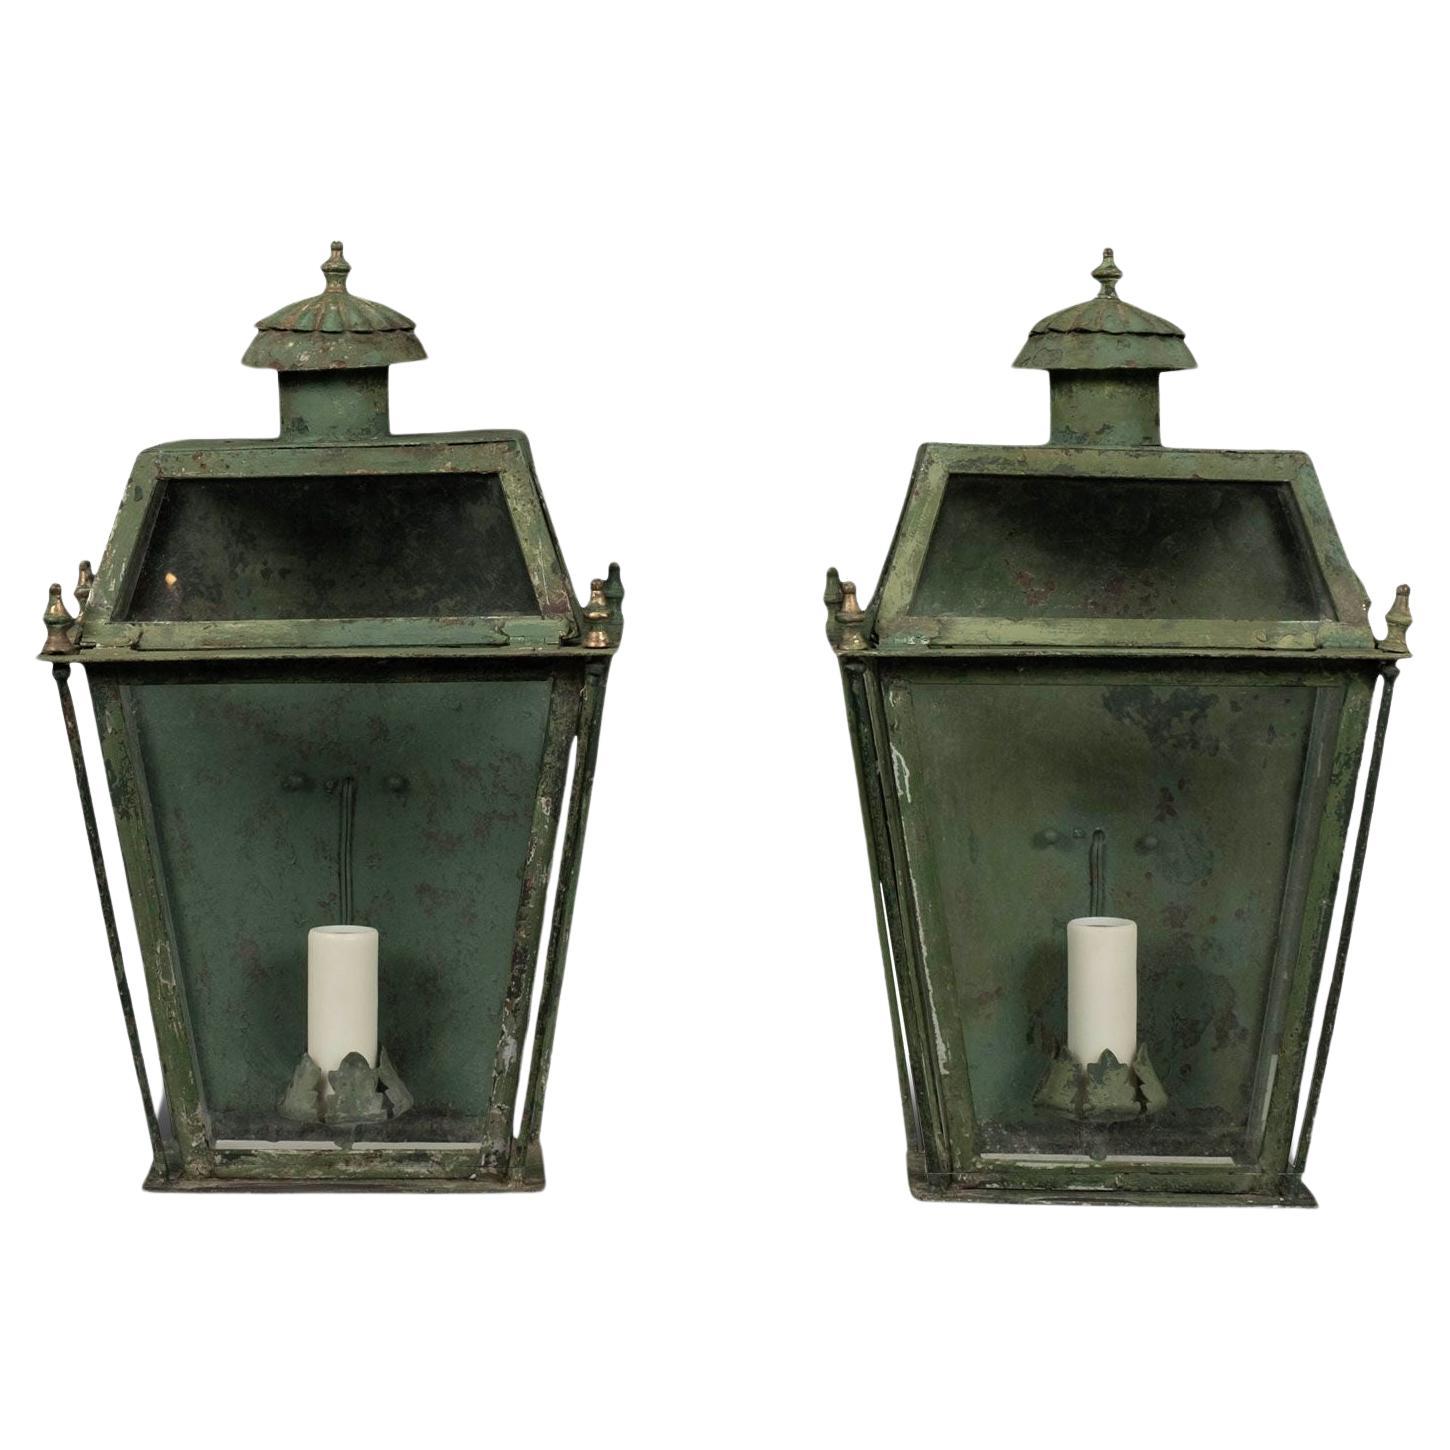 Pair of Verdigris Green Iron Wall Lanterns